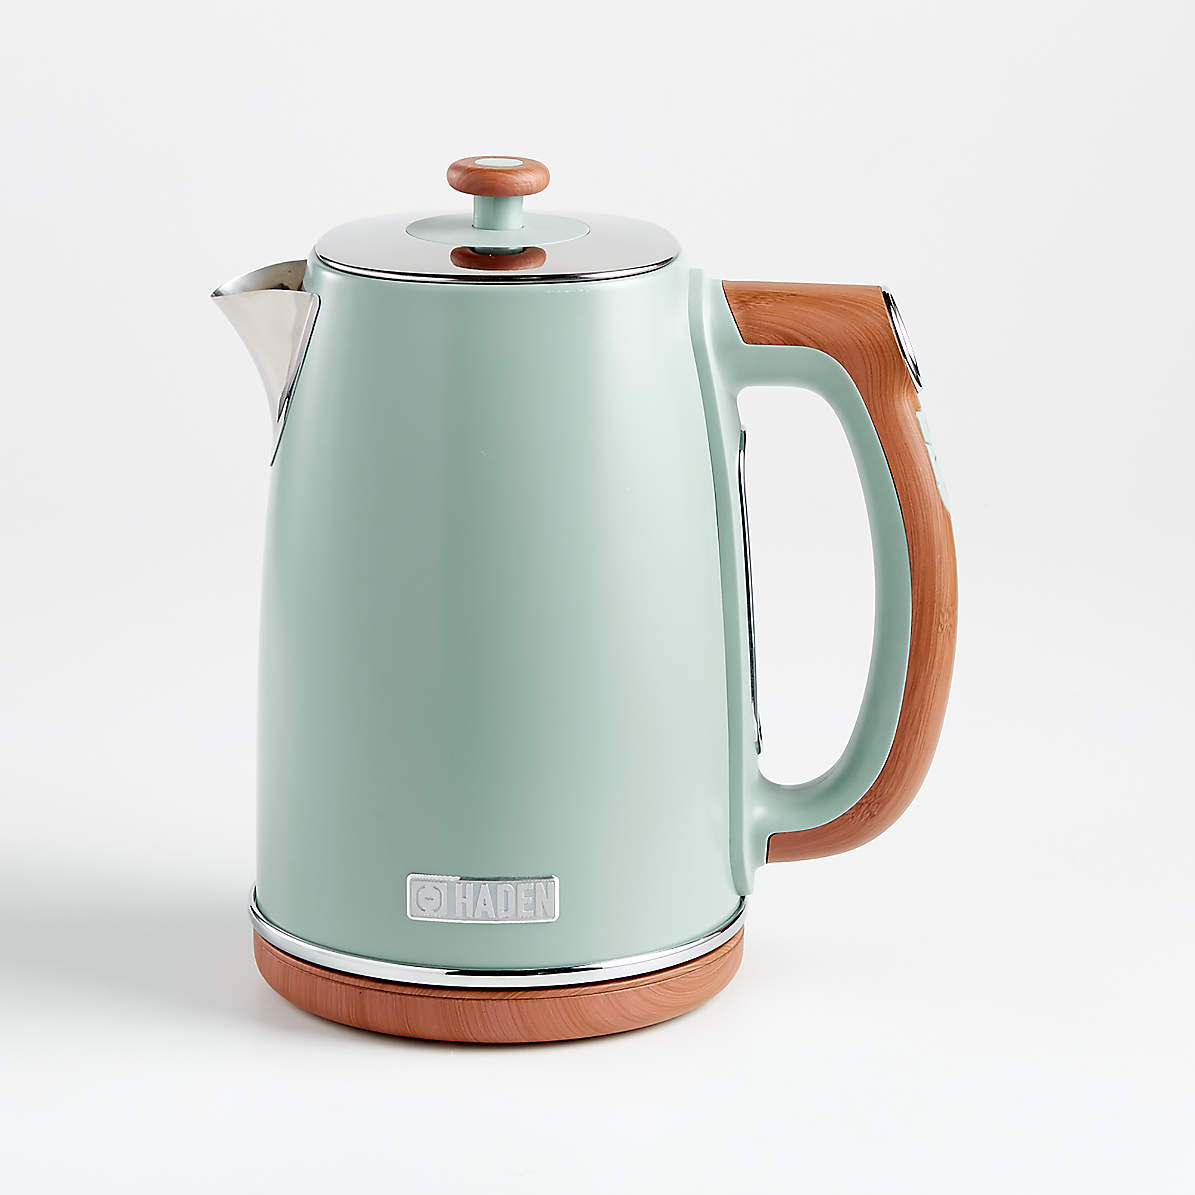 commercial electric tea kettle